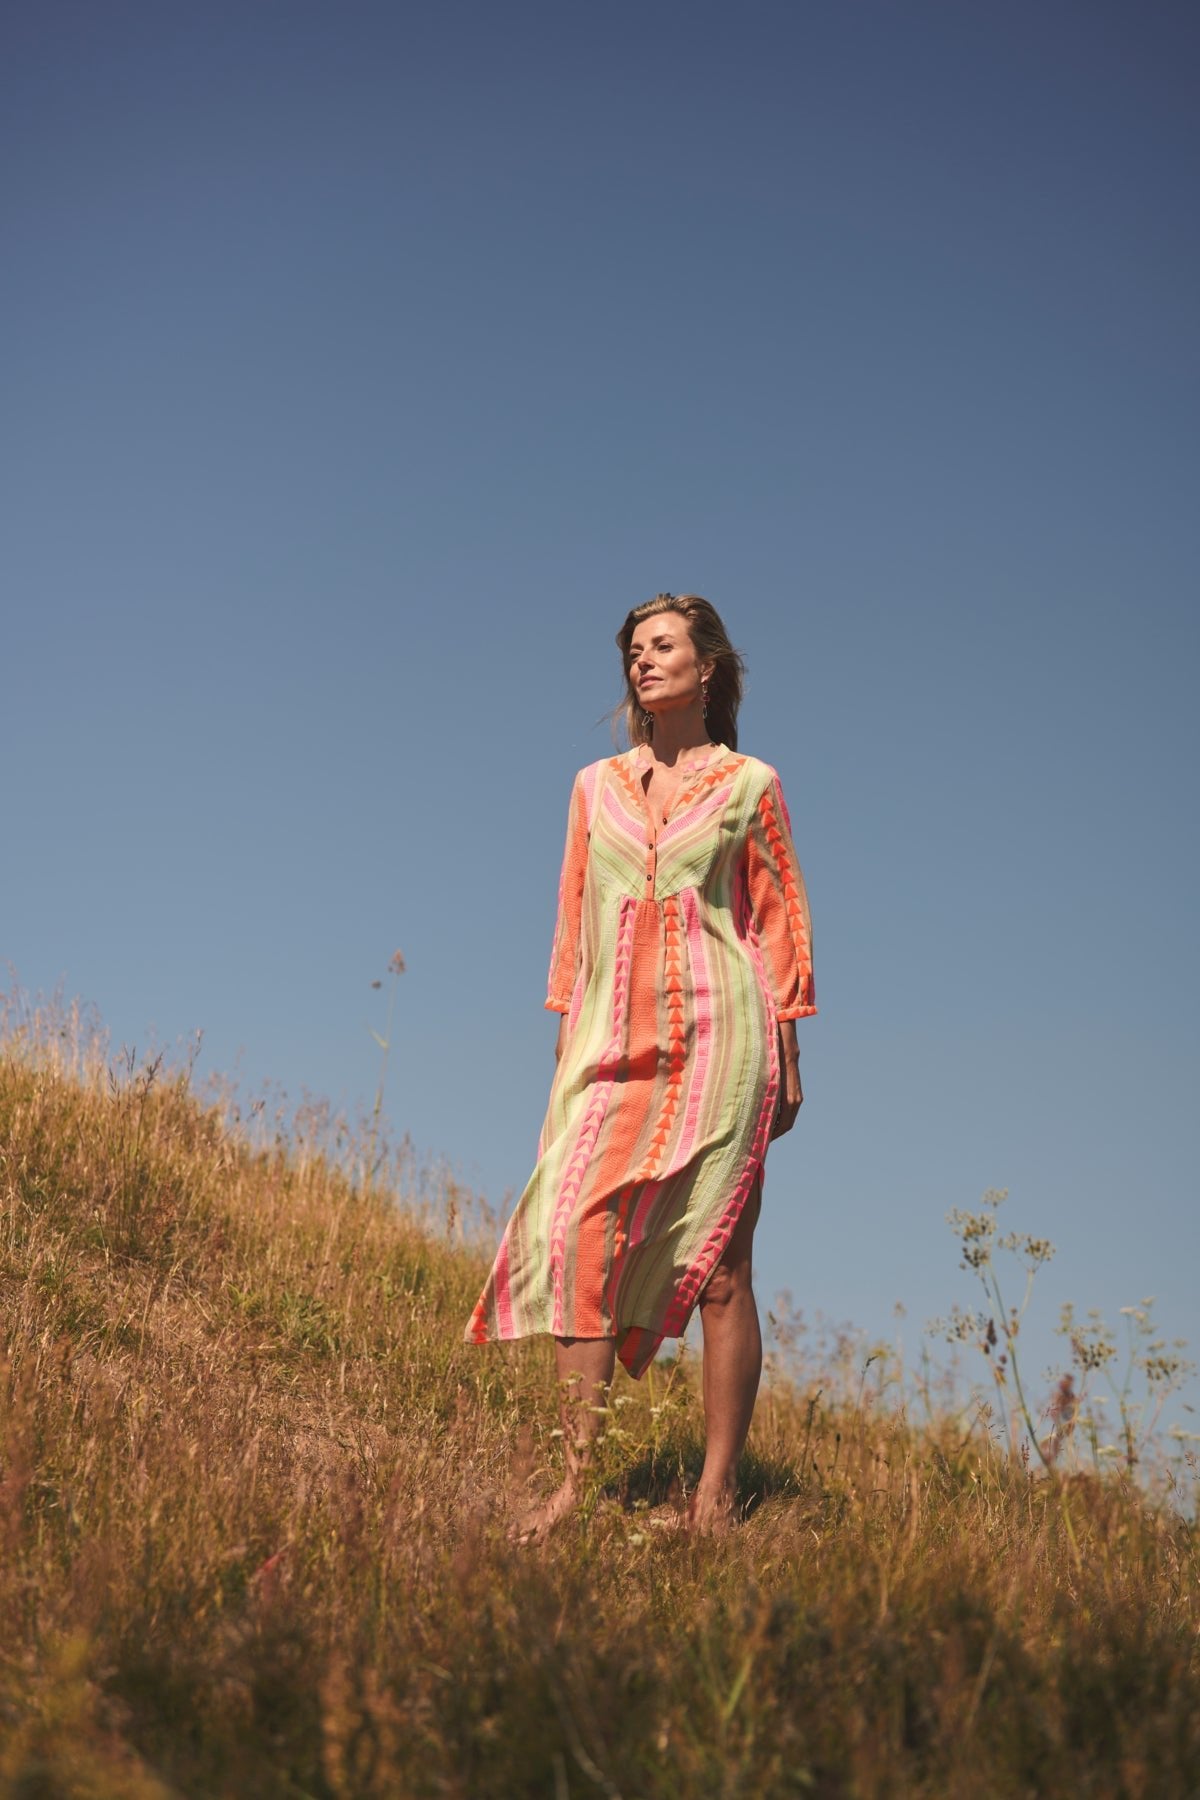 Sola Caftan dress by Cream - Blue Sky Fashions & Lingerie